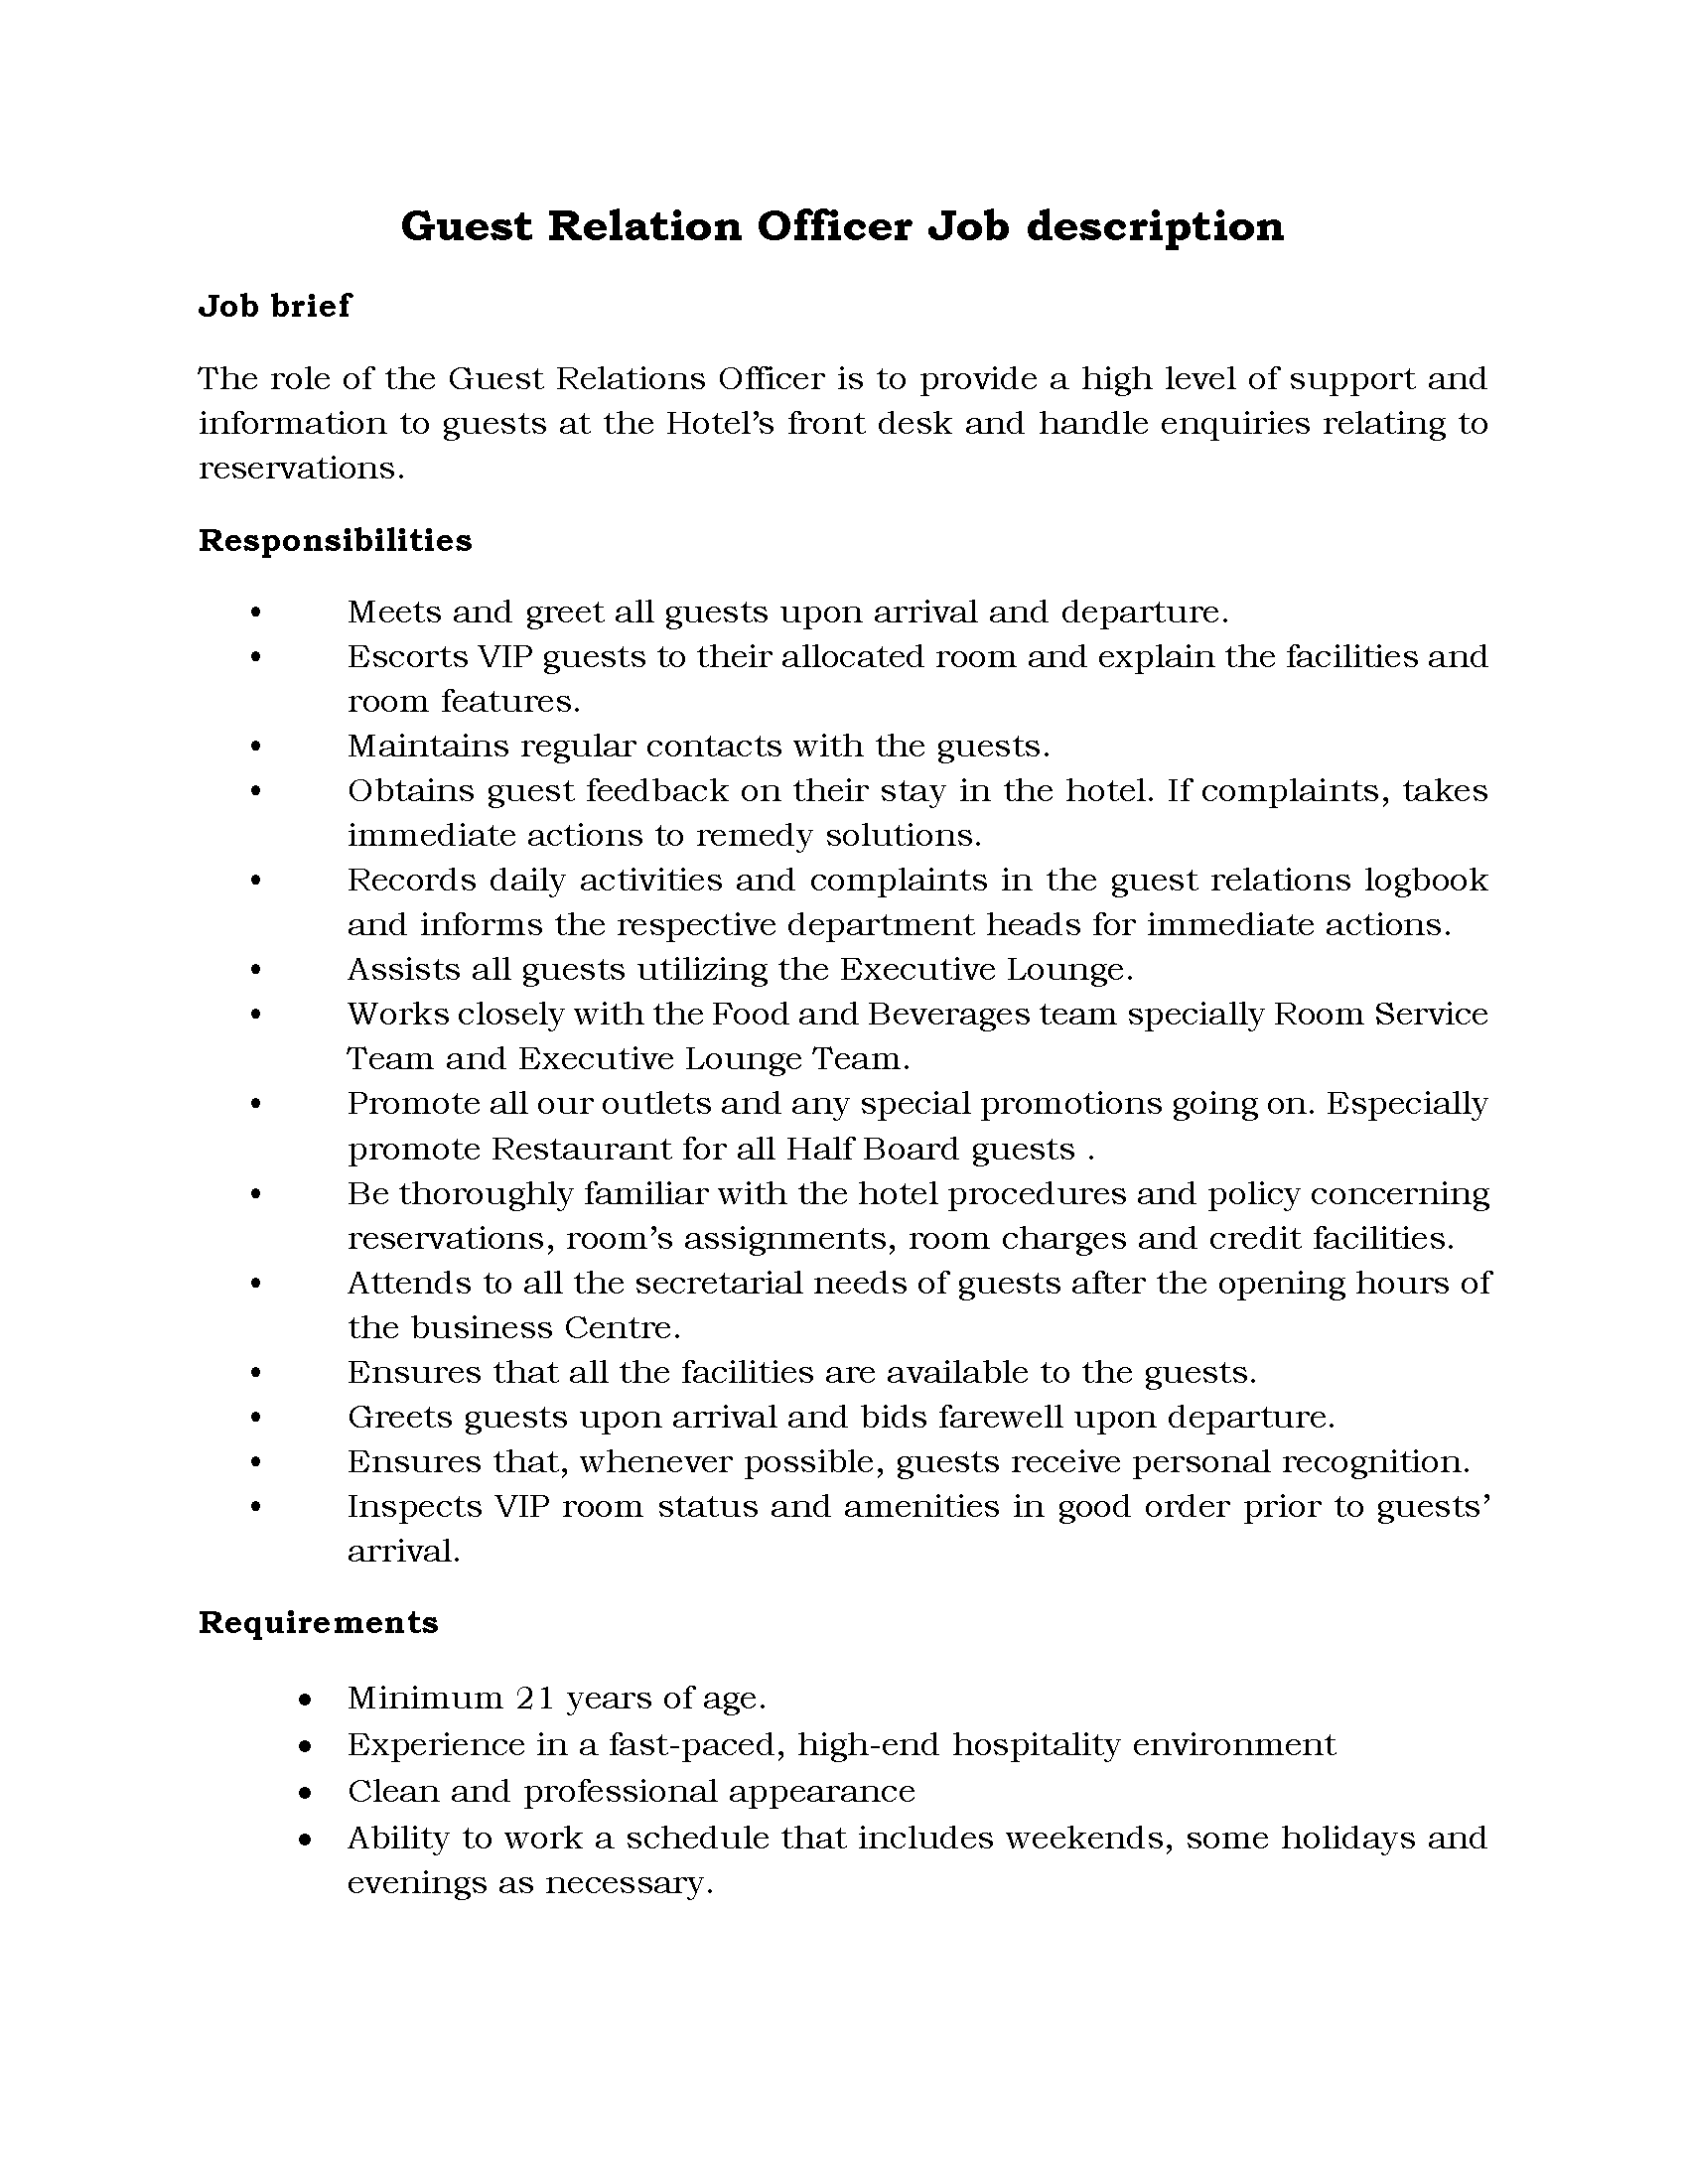 45-Guest Relation Officer Job description